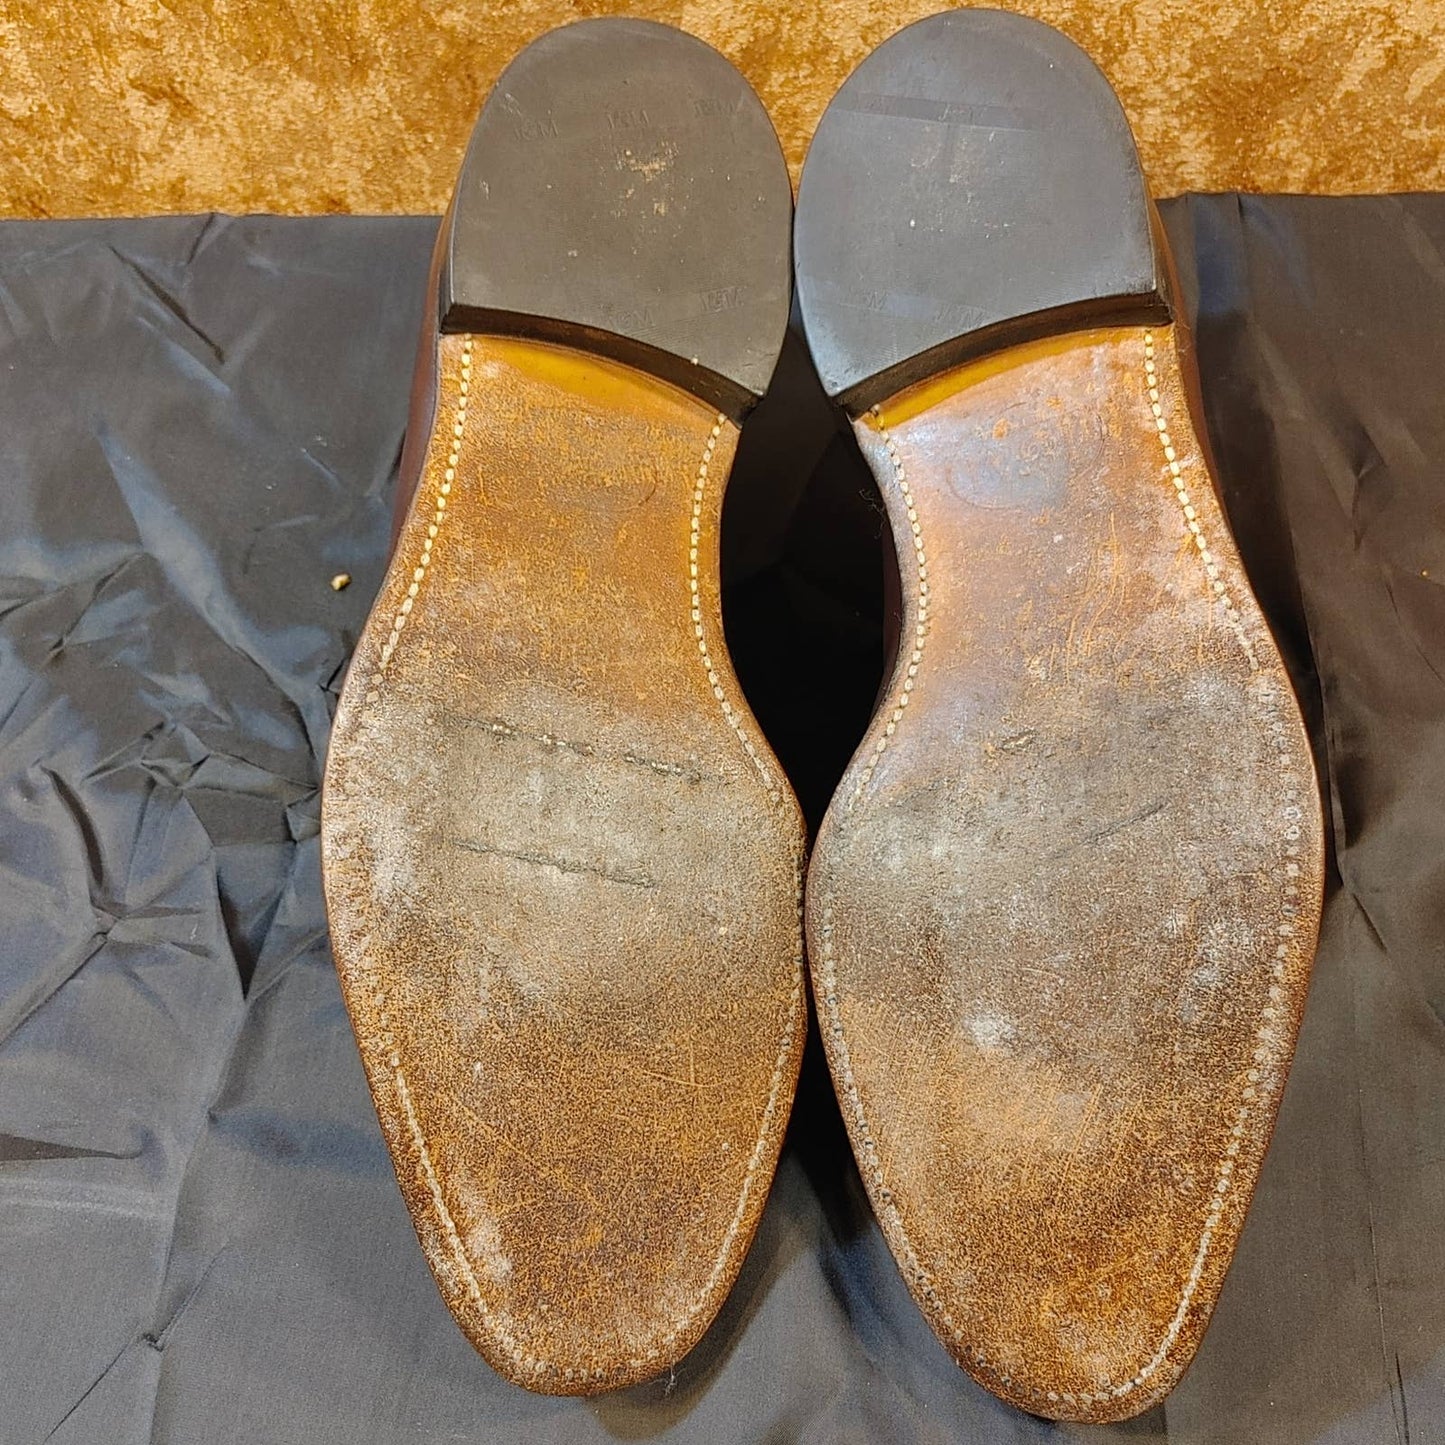 President's pair! Johnston & Murphy Blucher Brown Shoes 10.5 D? Free shipping!